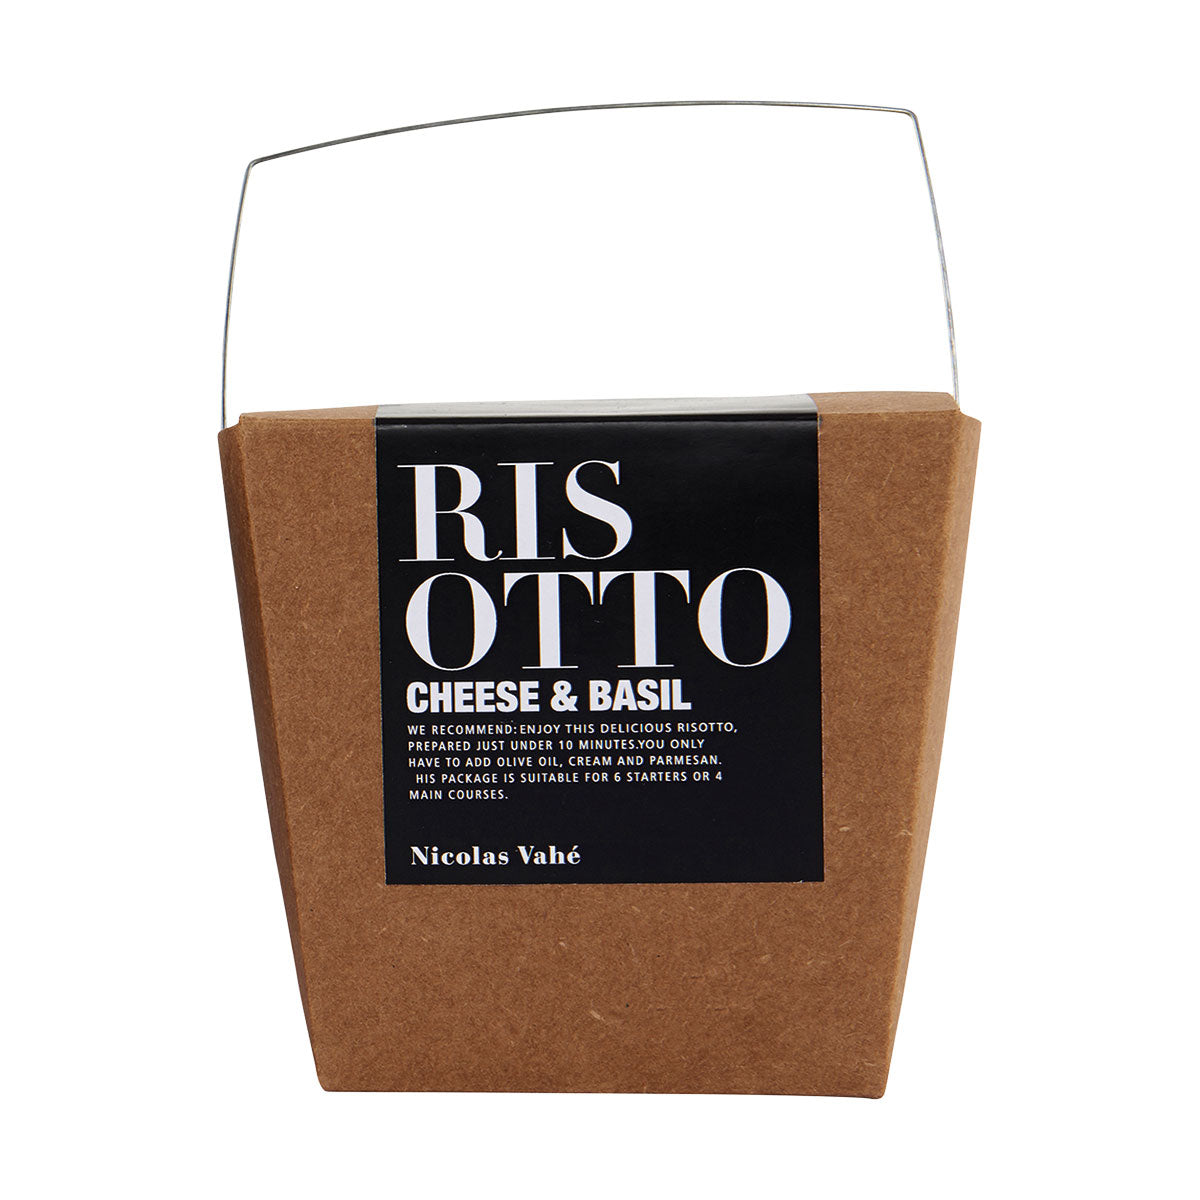 italian risotto in a take away box made of brown carton